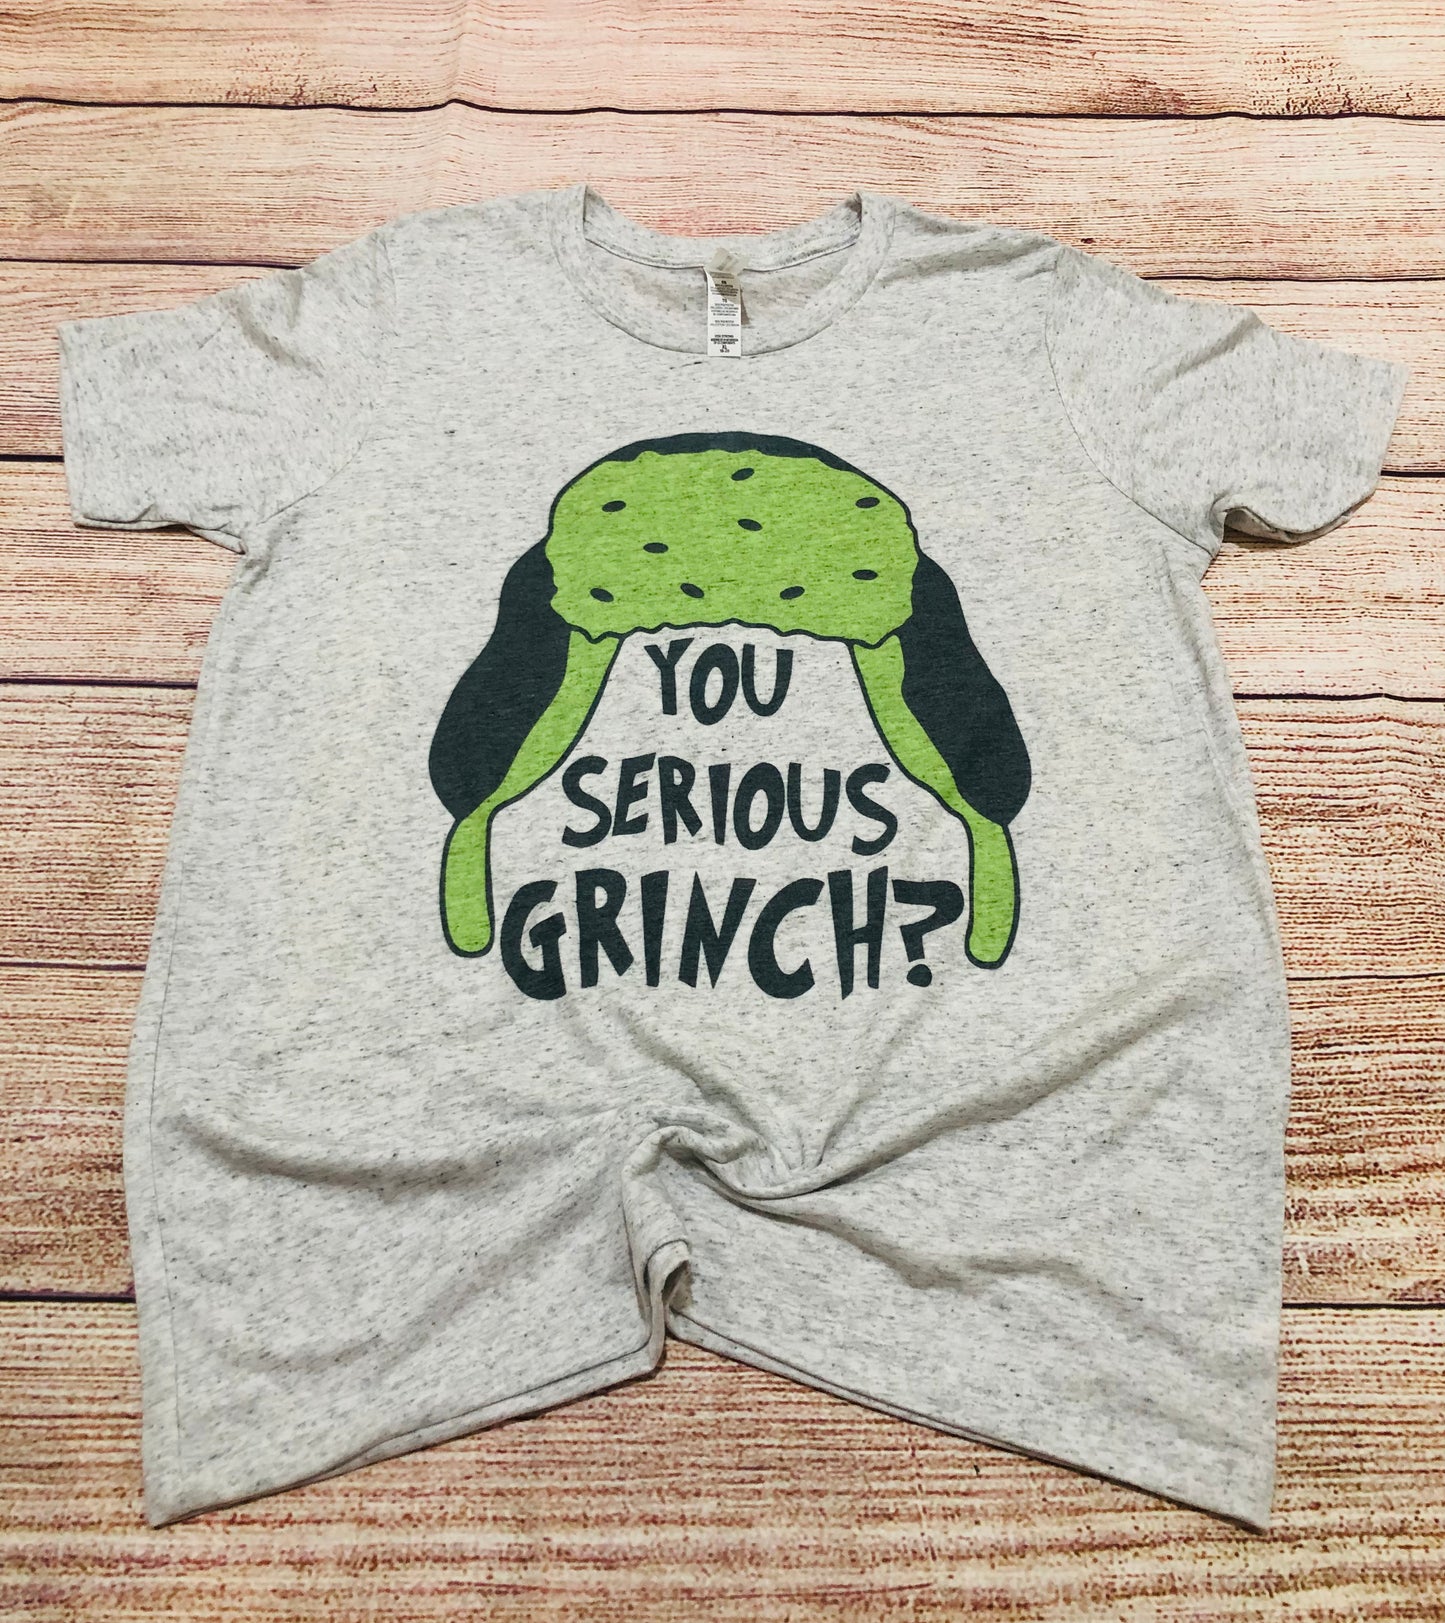 Grinch shirts